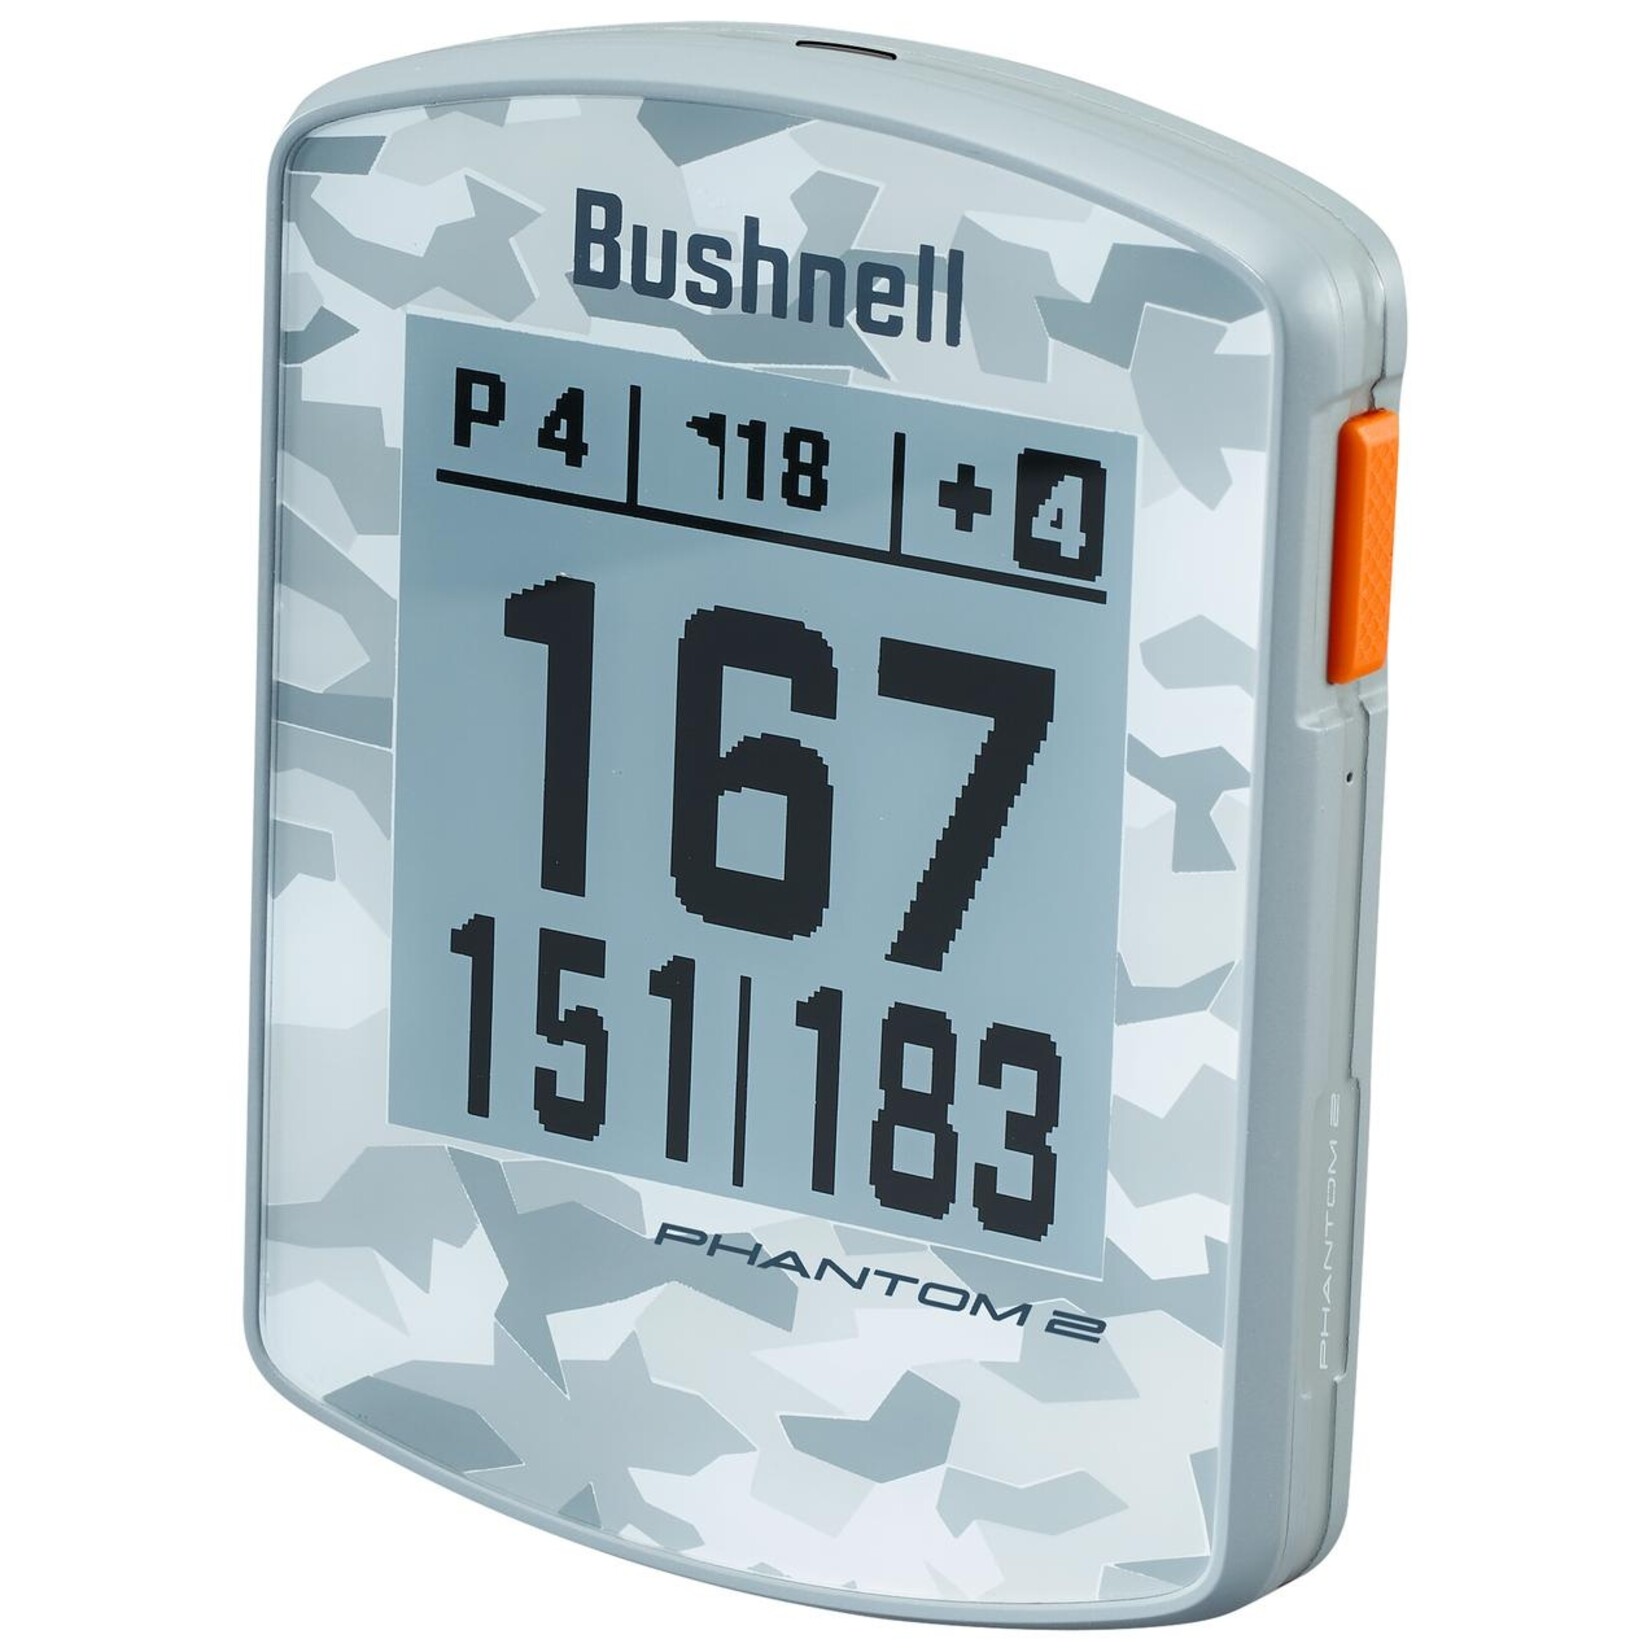 Bushnell Bushnell Phantom 2 GPS